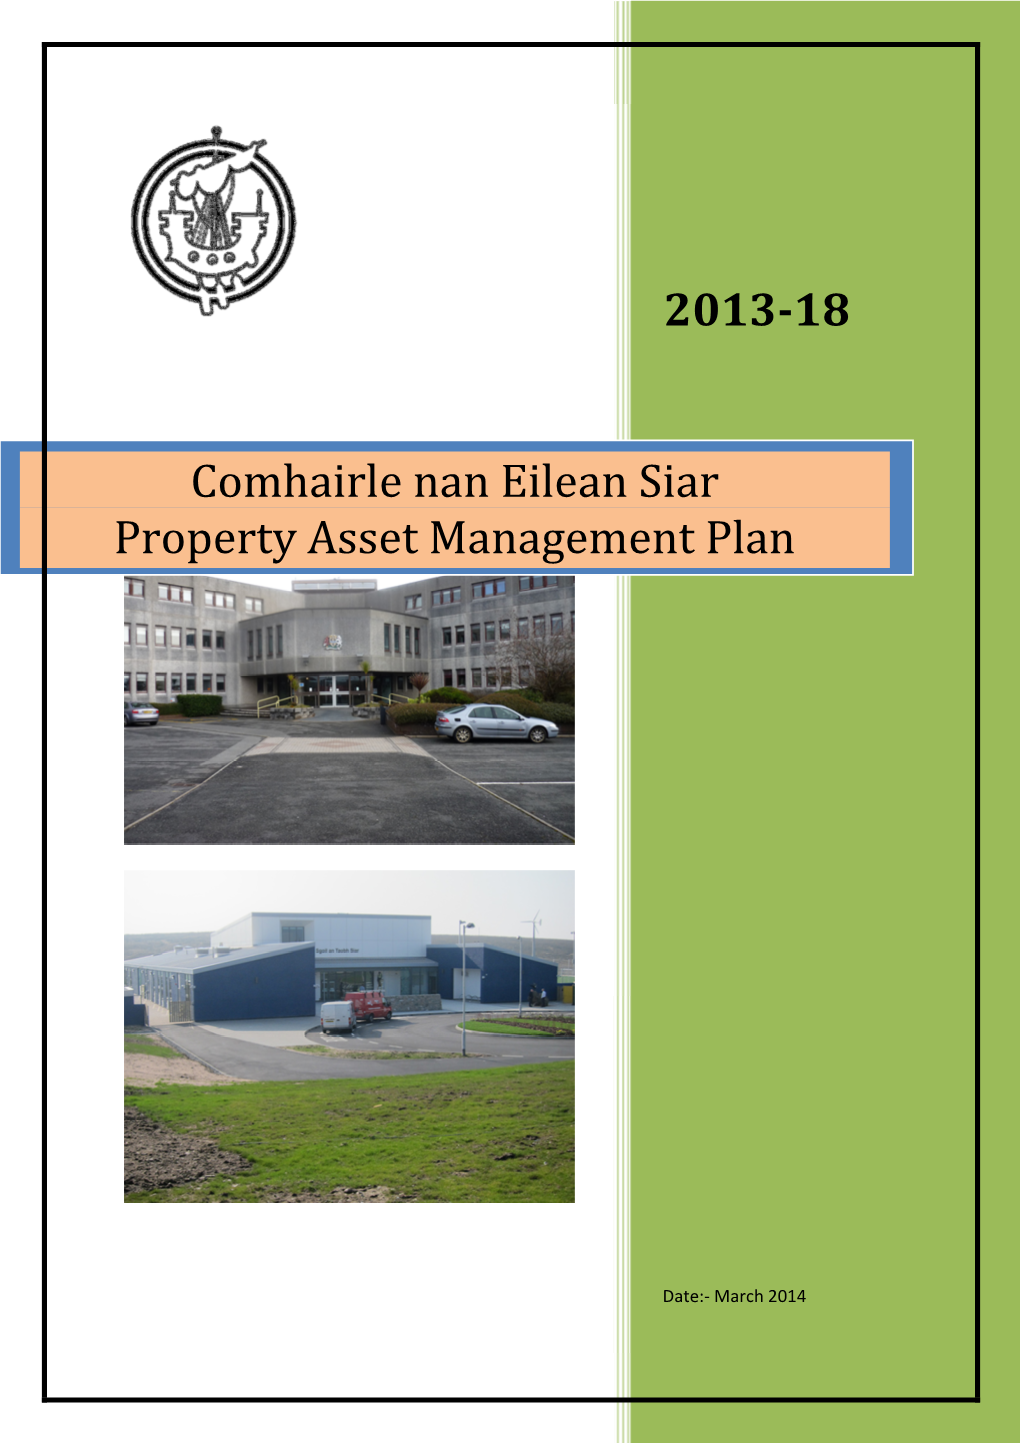 2013-18 Comhairle Nan Eilean Siar Property Asset Management Plan